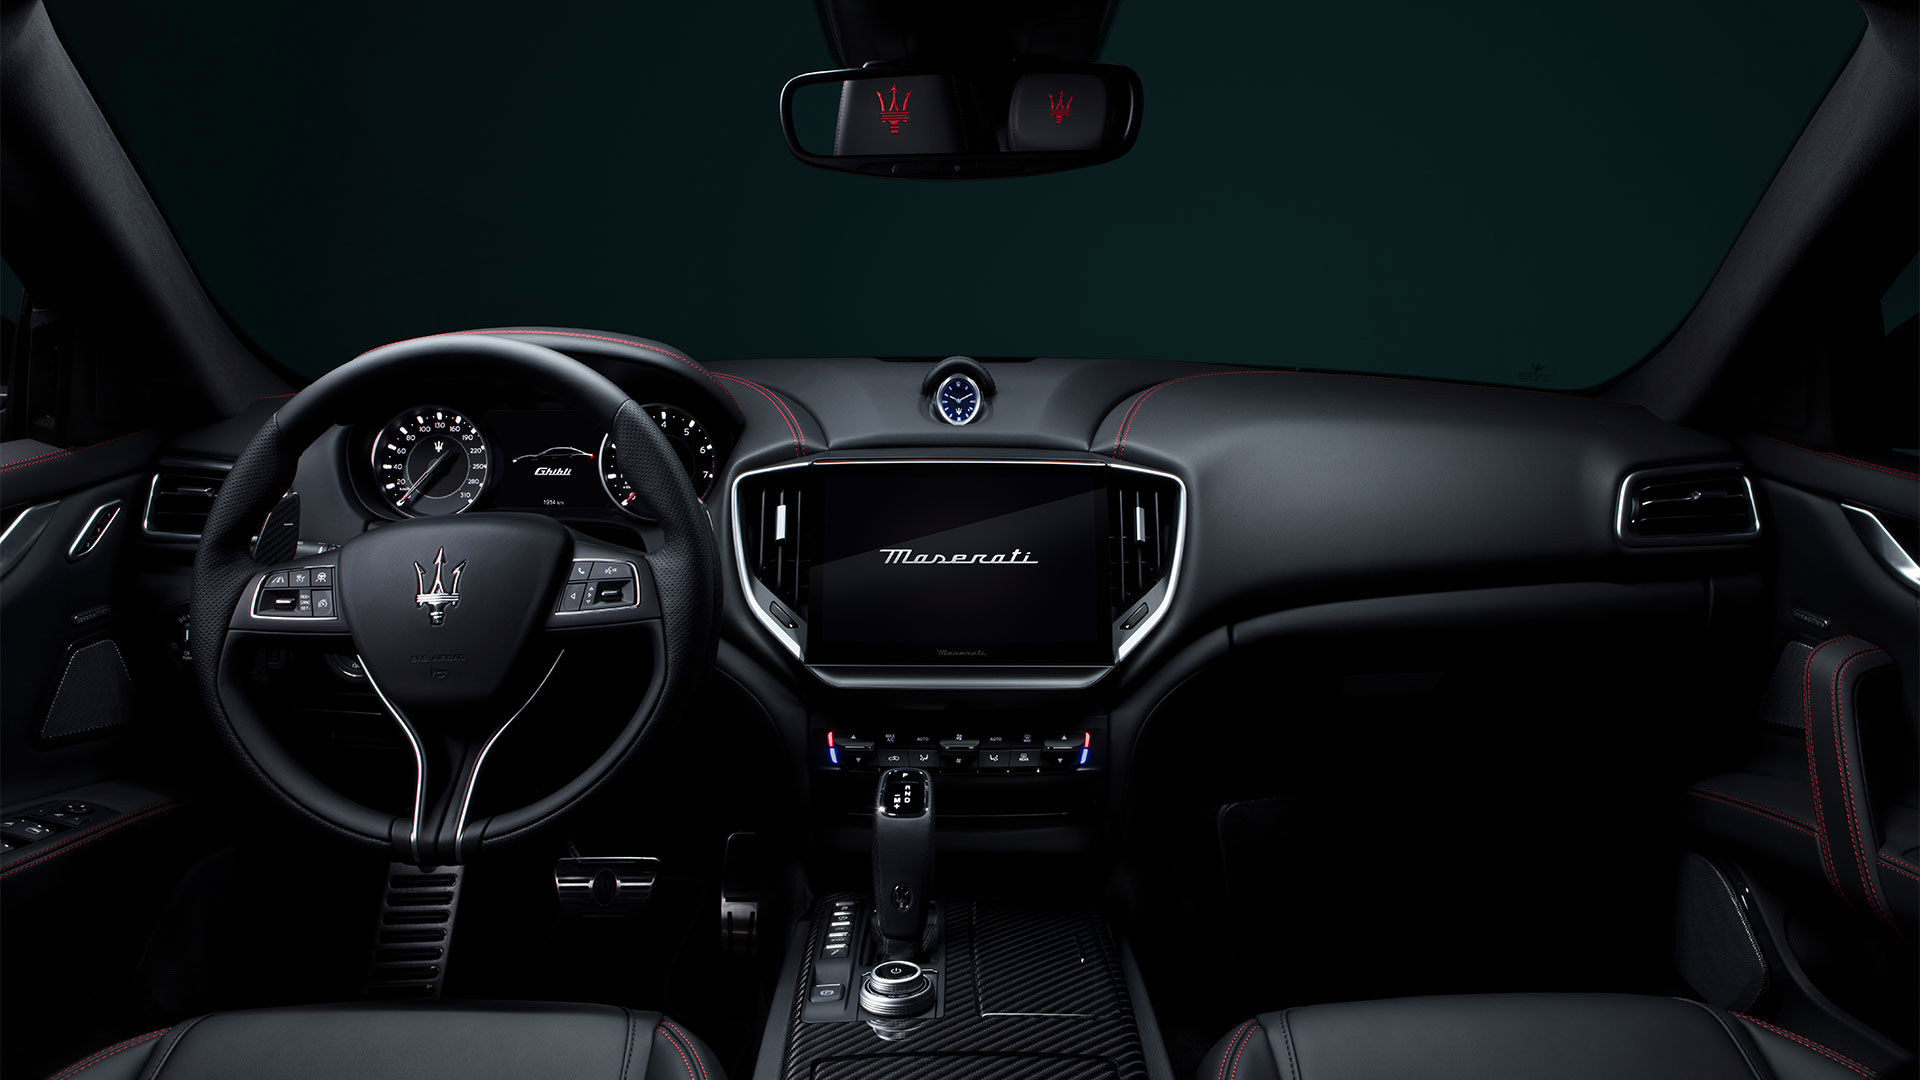 Interior samochodu sportowego Maserati Ghibli